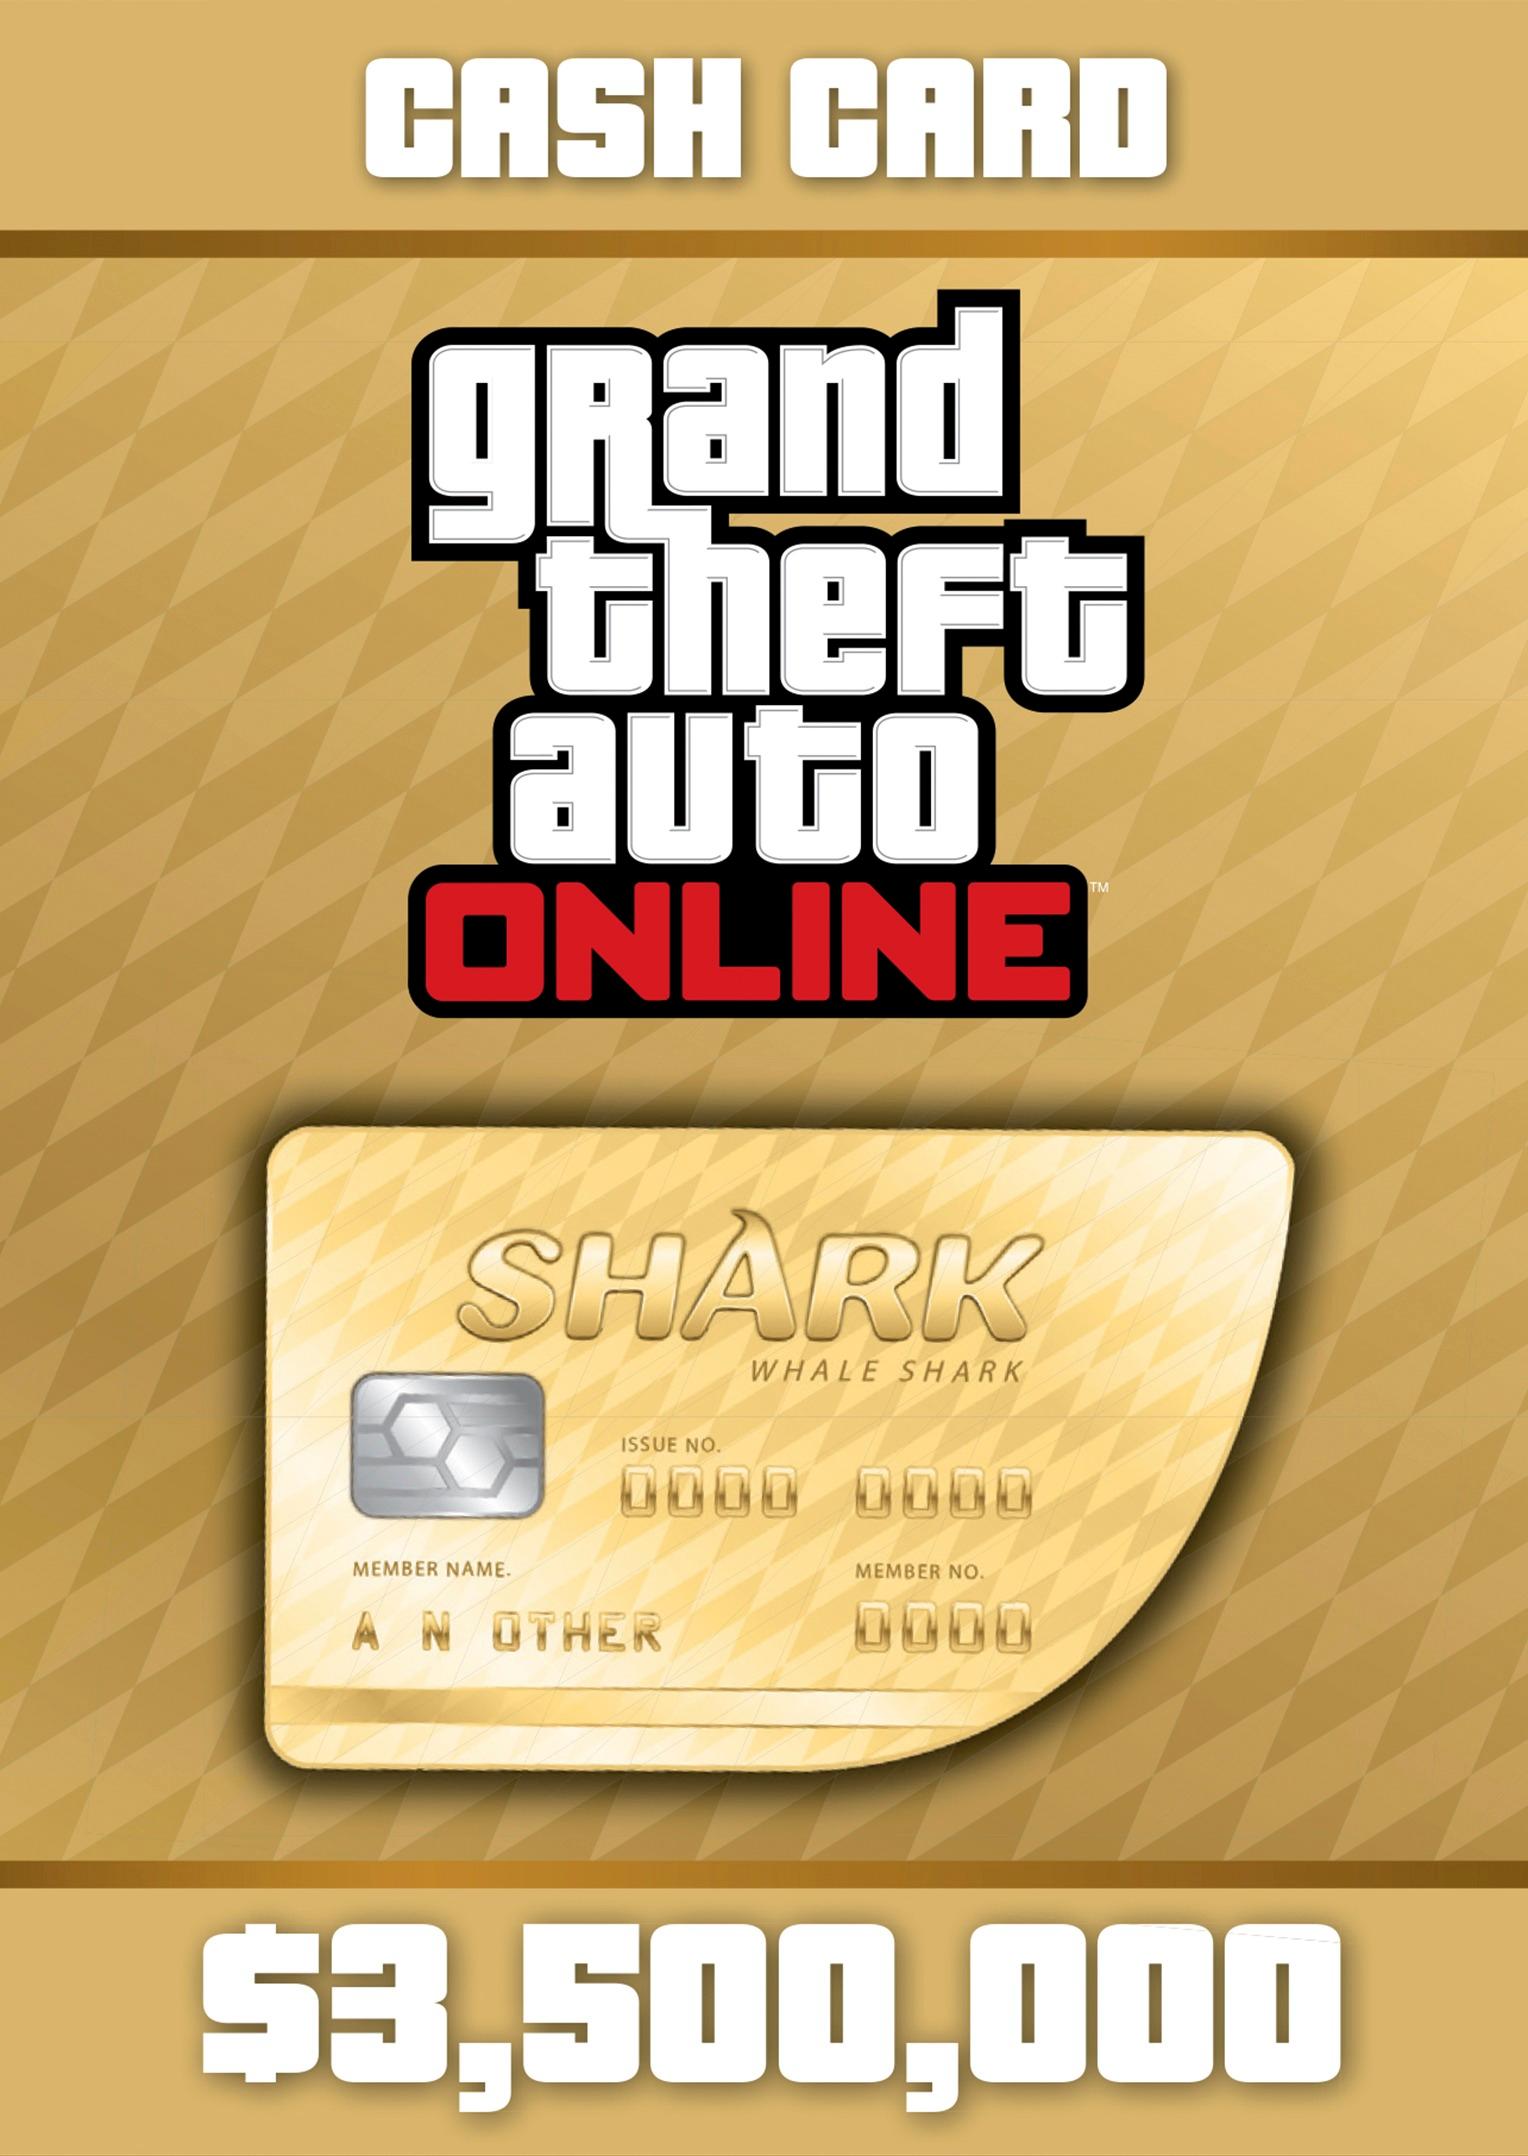 Grand Theft Auto V $3500000 Whale Shark Cash Card - Xbox One [Digital]